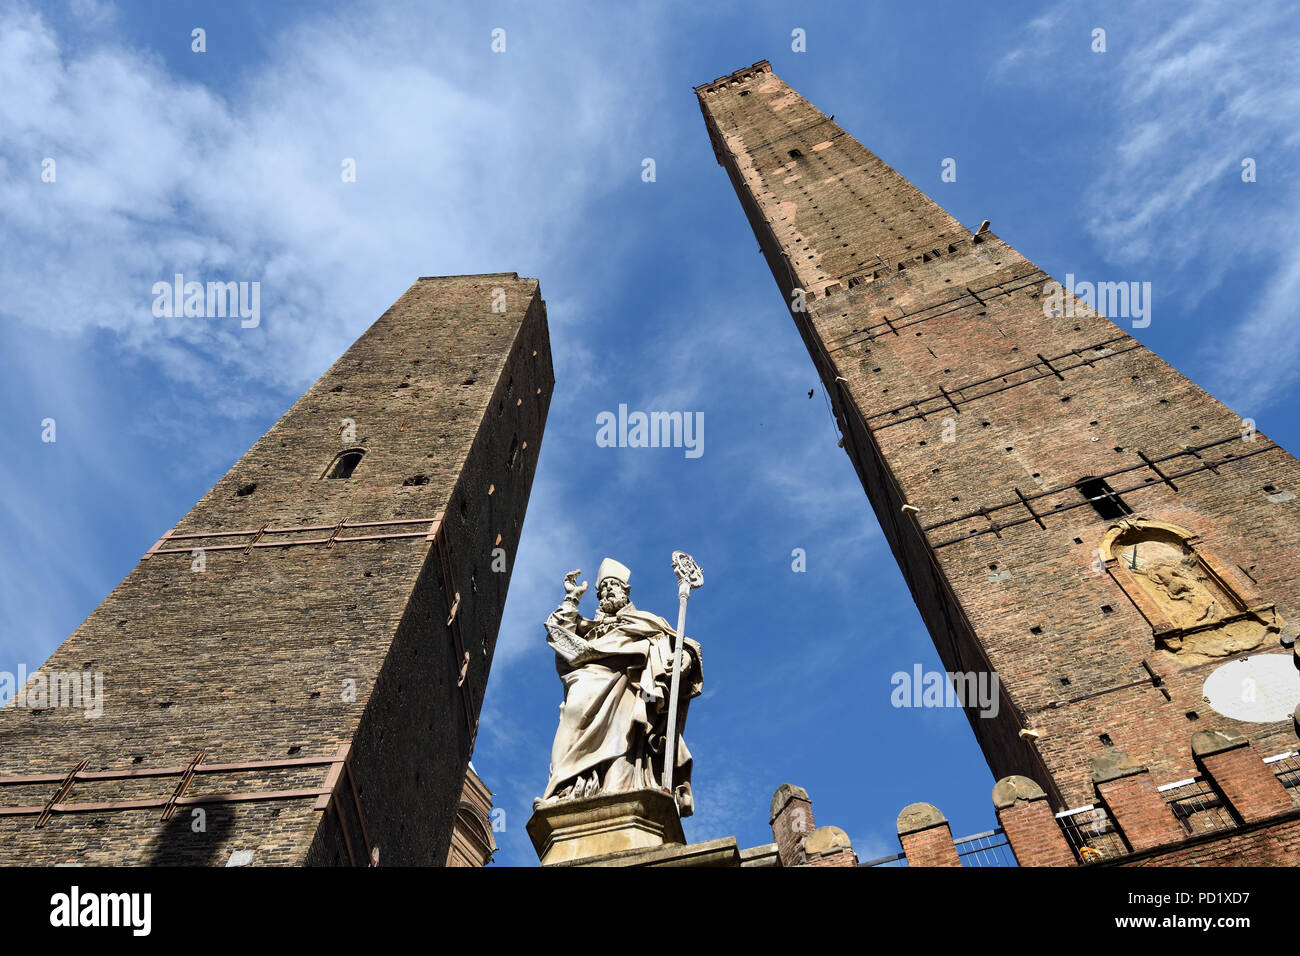 Garisenda Turmes, Statue des Hl. Petronius und Asinelli Turm, Bologna, Emilia-Romagna, Italien Symbole der mittelalterlichen Bologna zwei Türme (Due Torri), Stockfoto